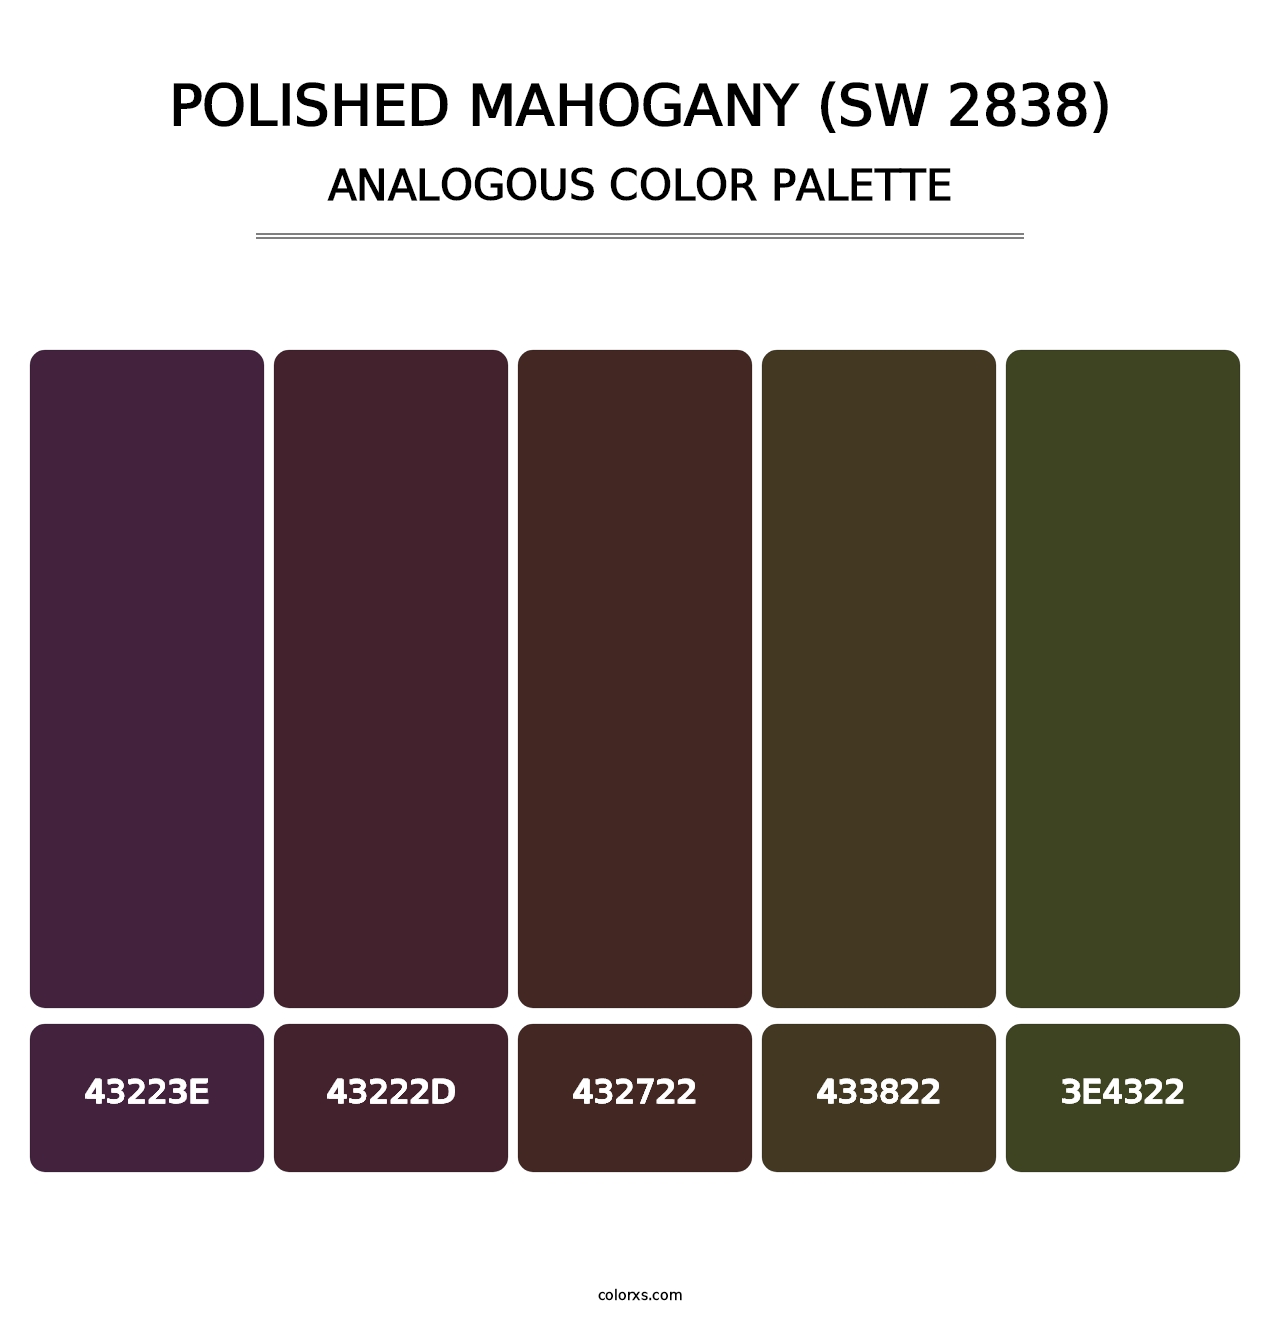 Polished Mahogany (SW 2838) - Analogous Color Palette